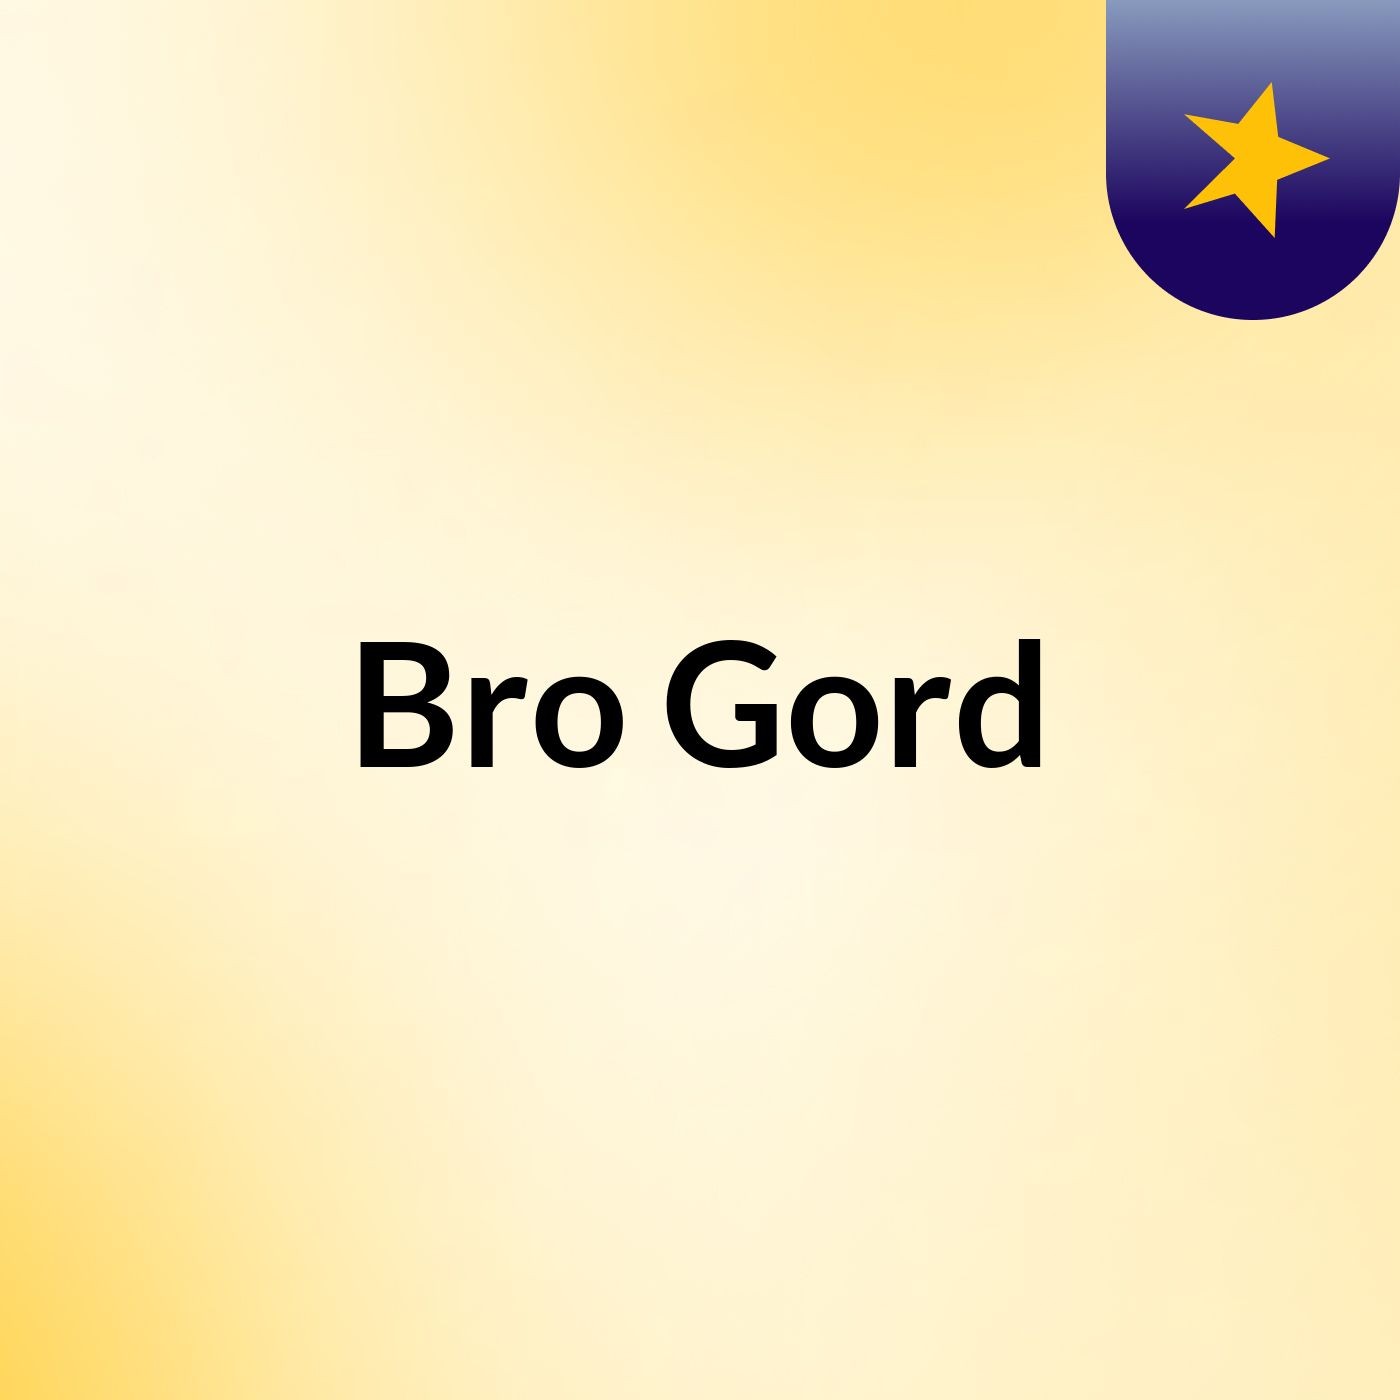 Bro Gord